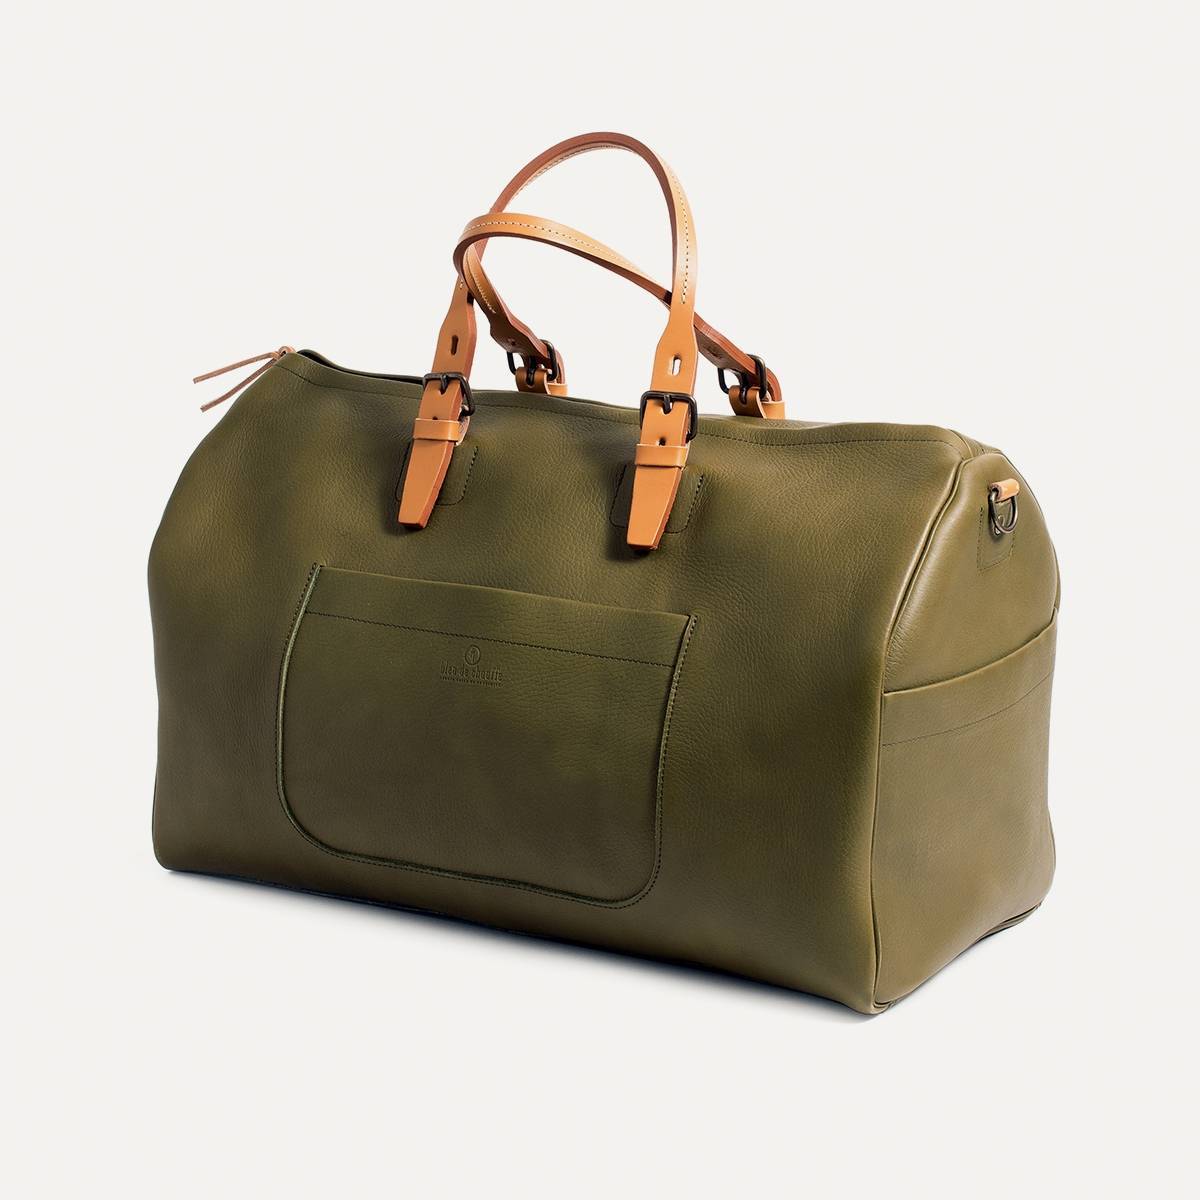 Leather travel bag for Men - Made in france